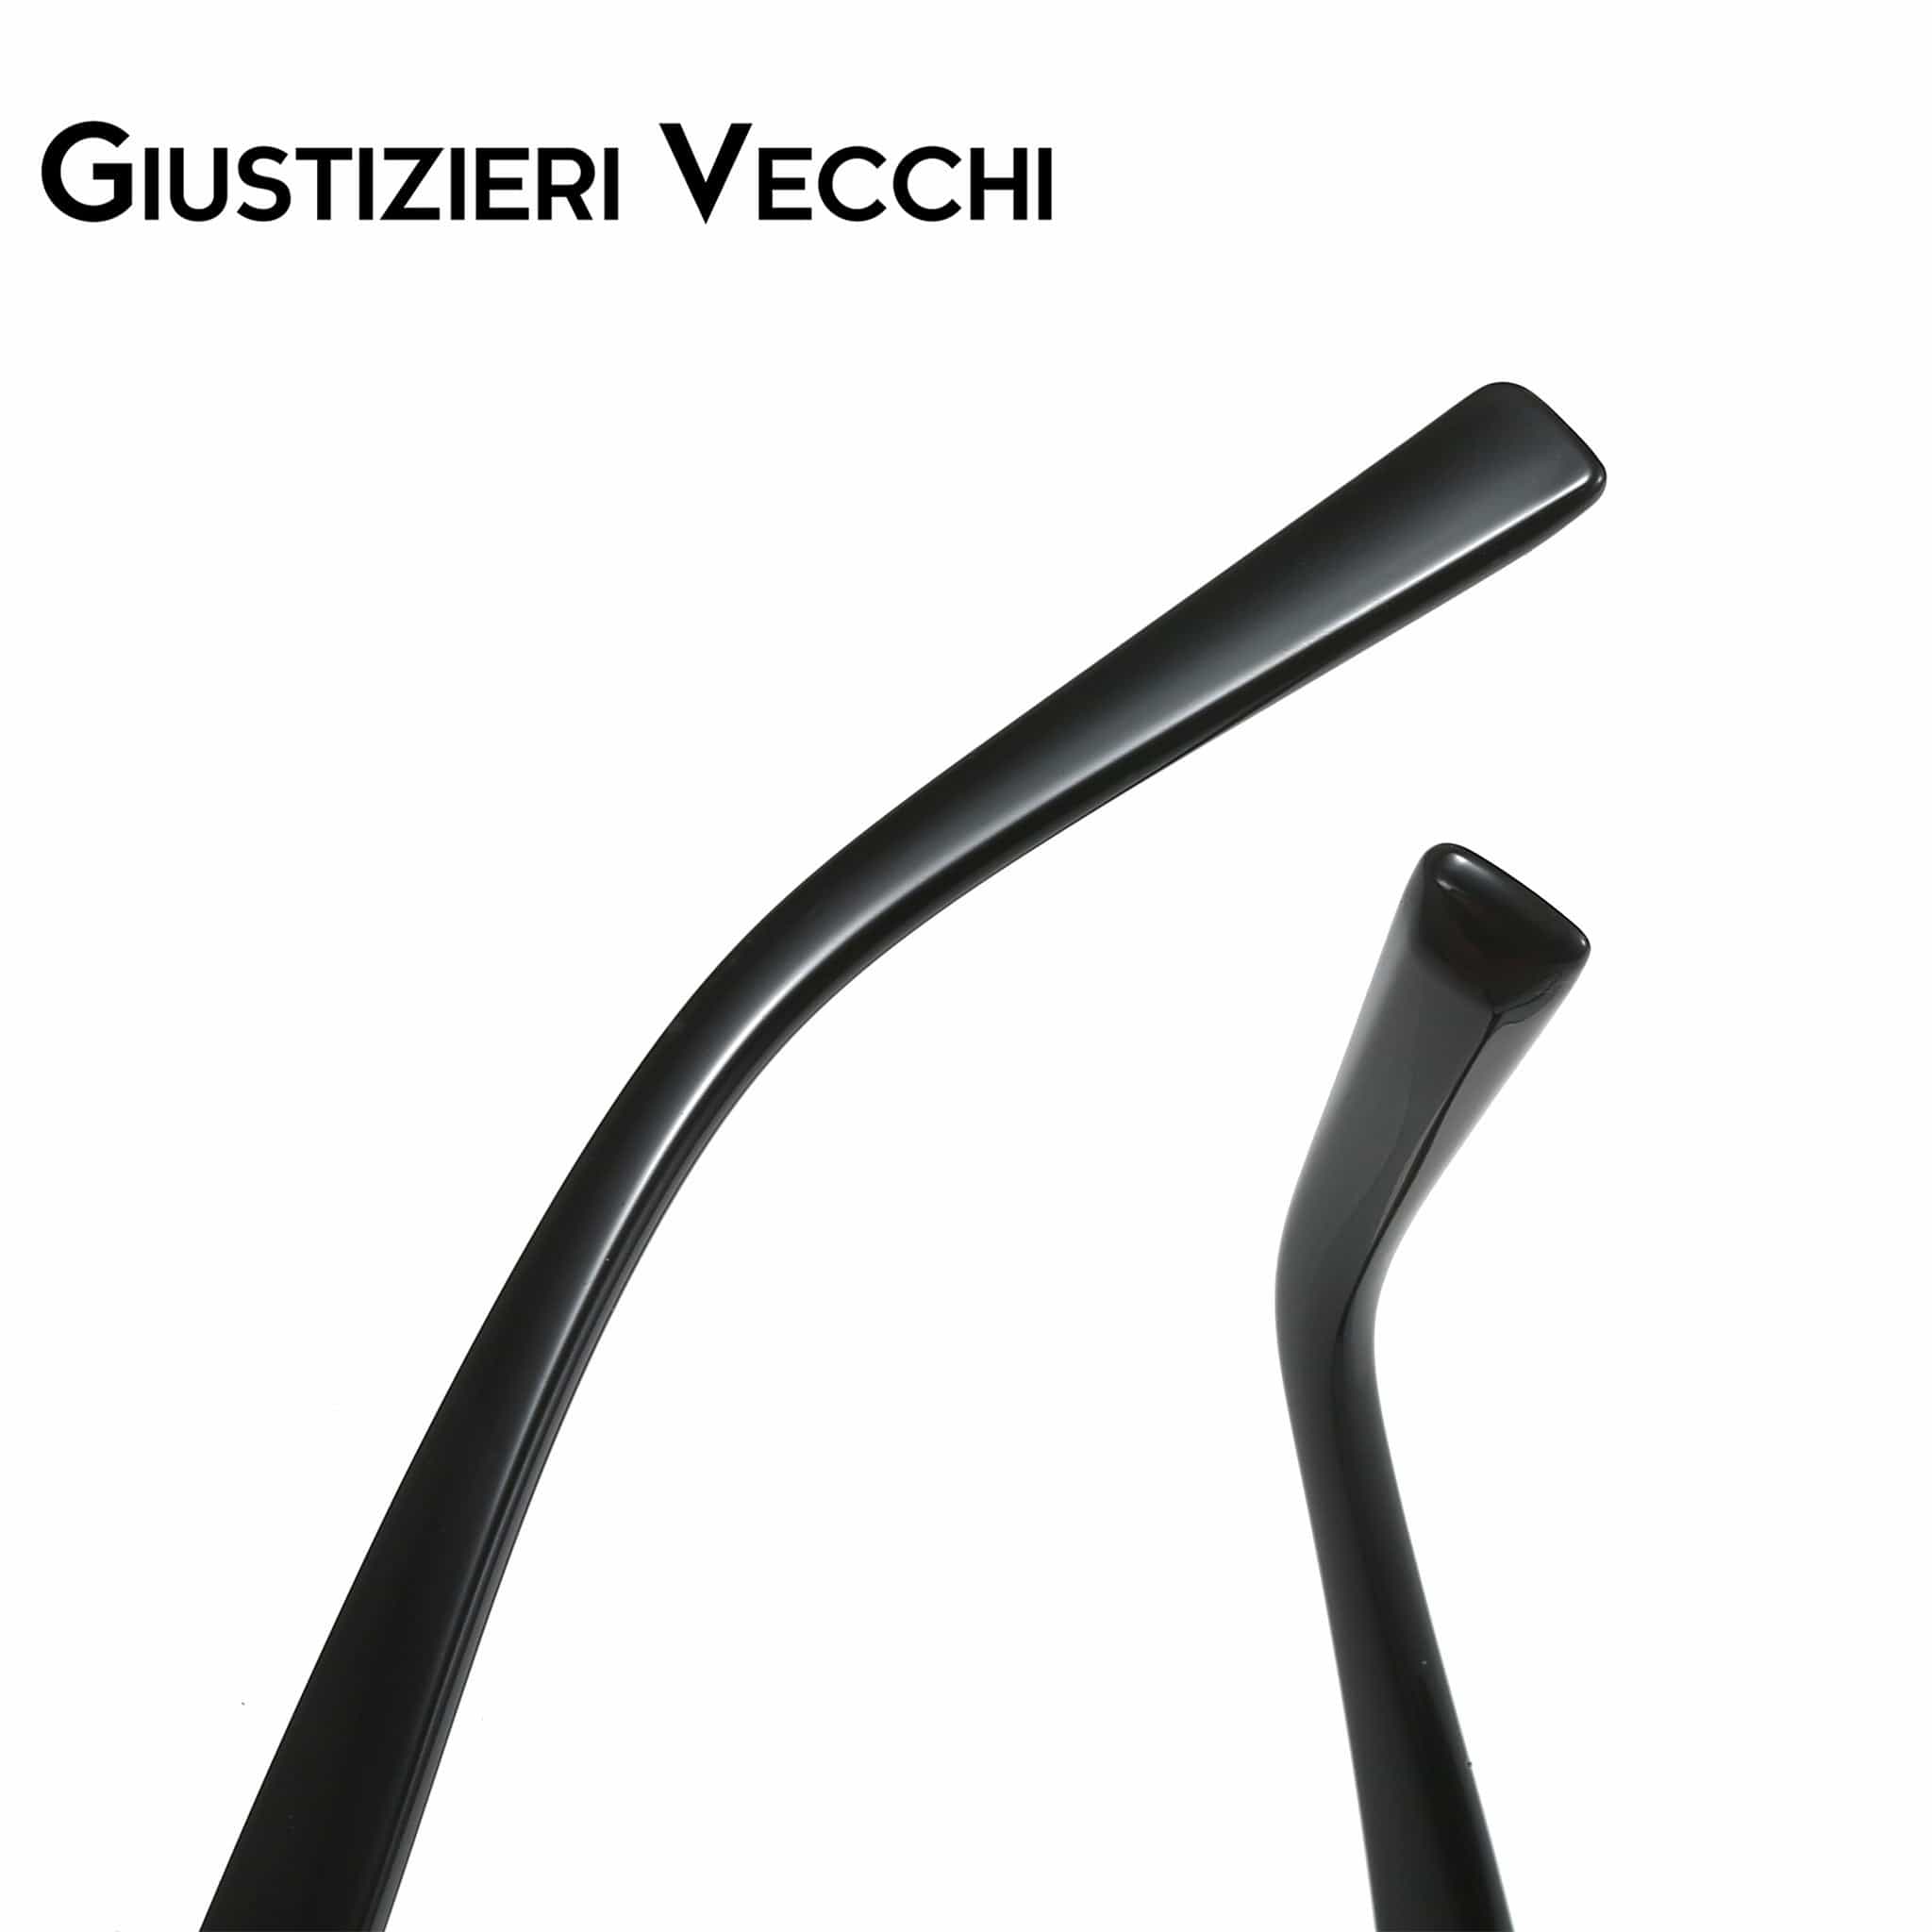 GIUSTIZIERI VECCHI Eyeglasses Medium / Black Gioia Uno